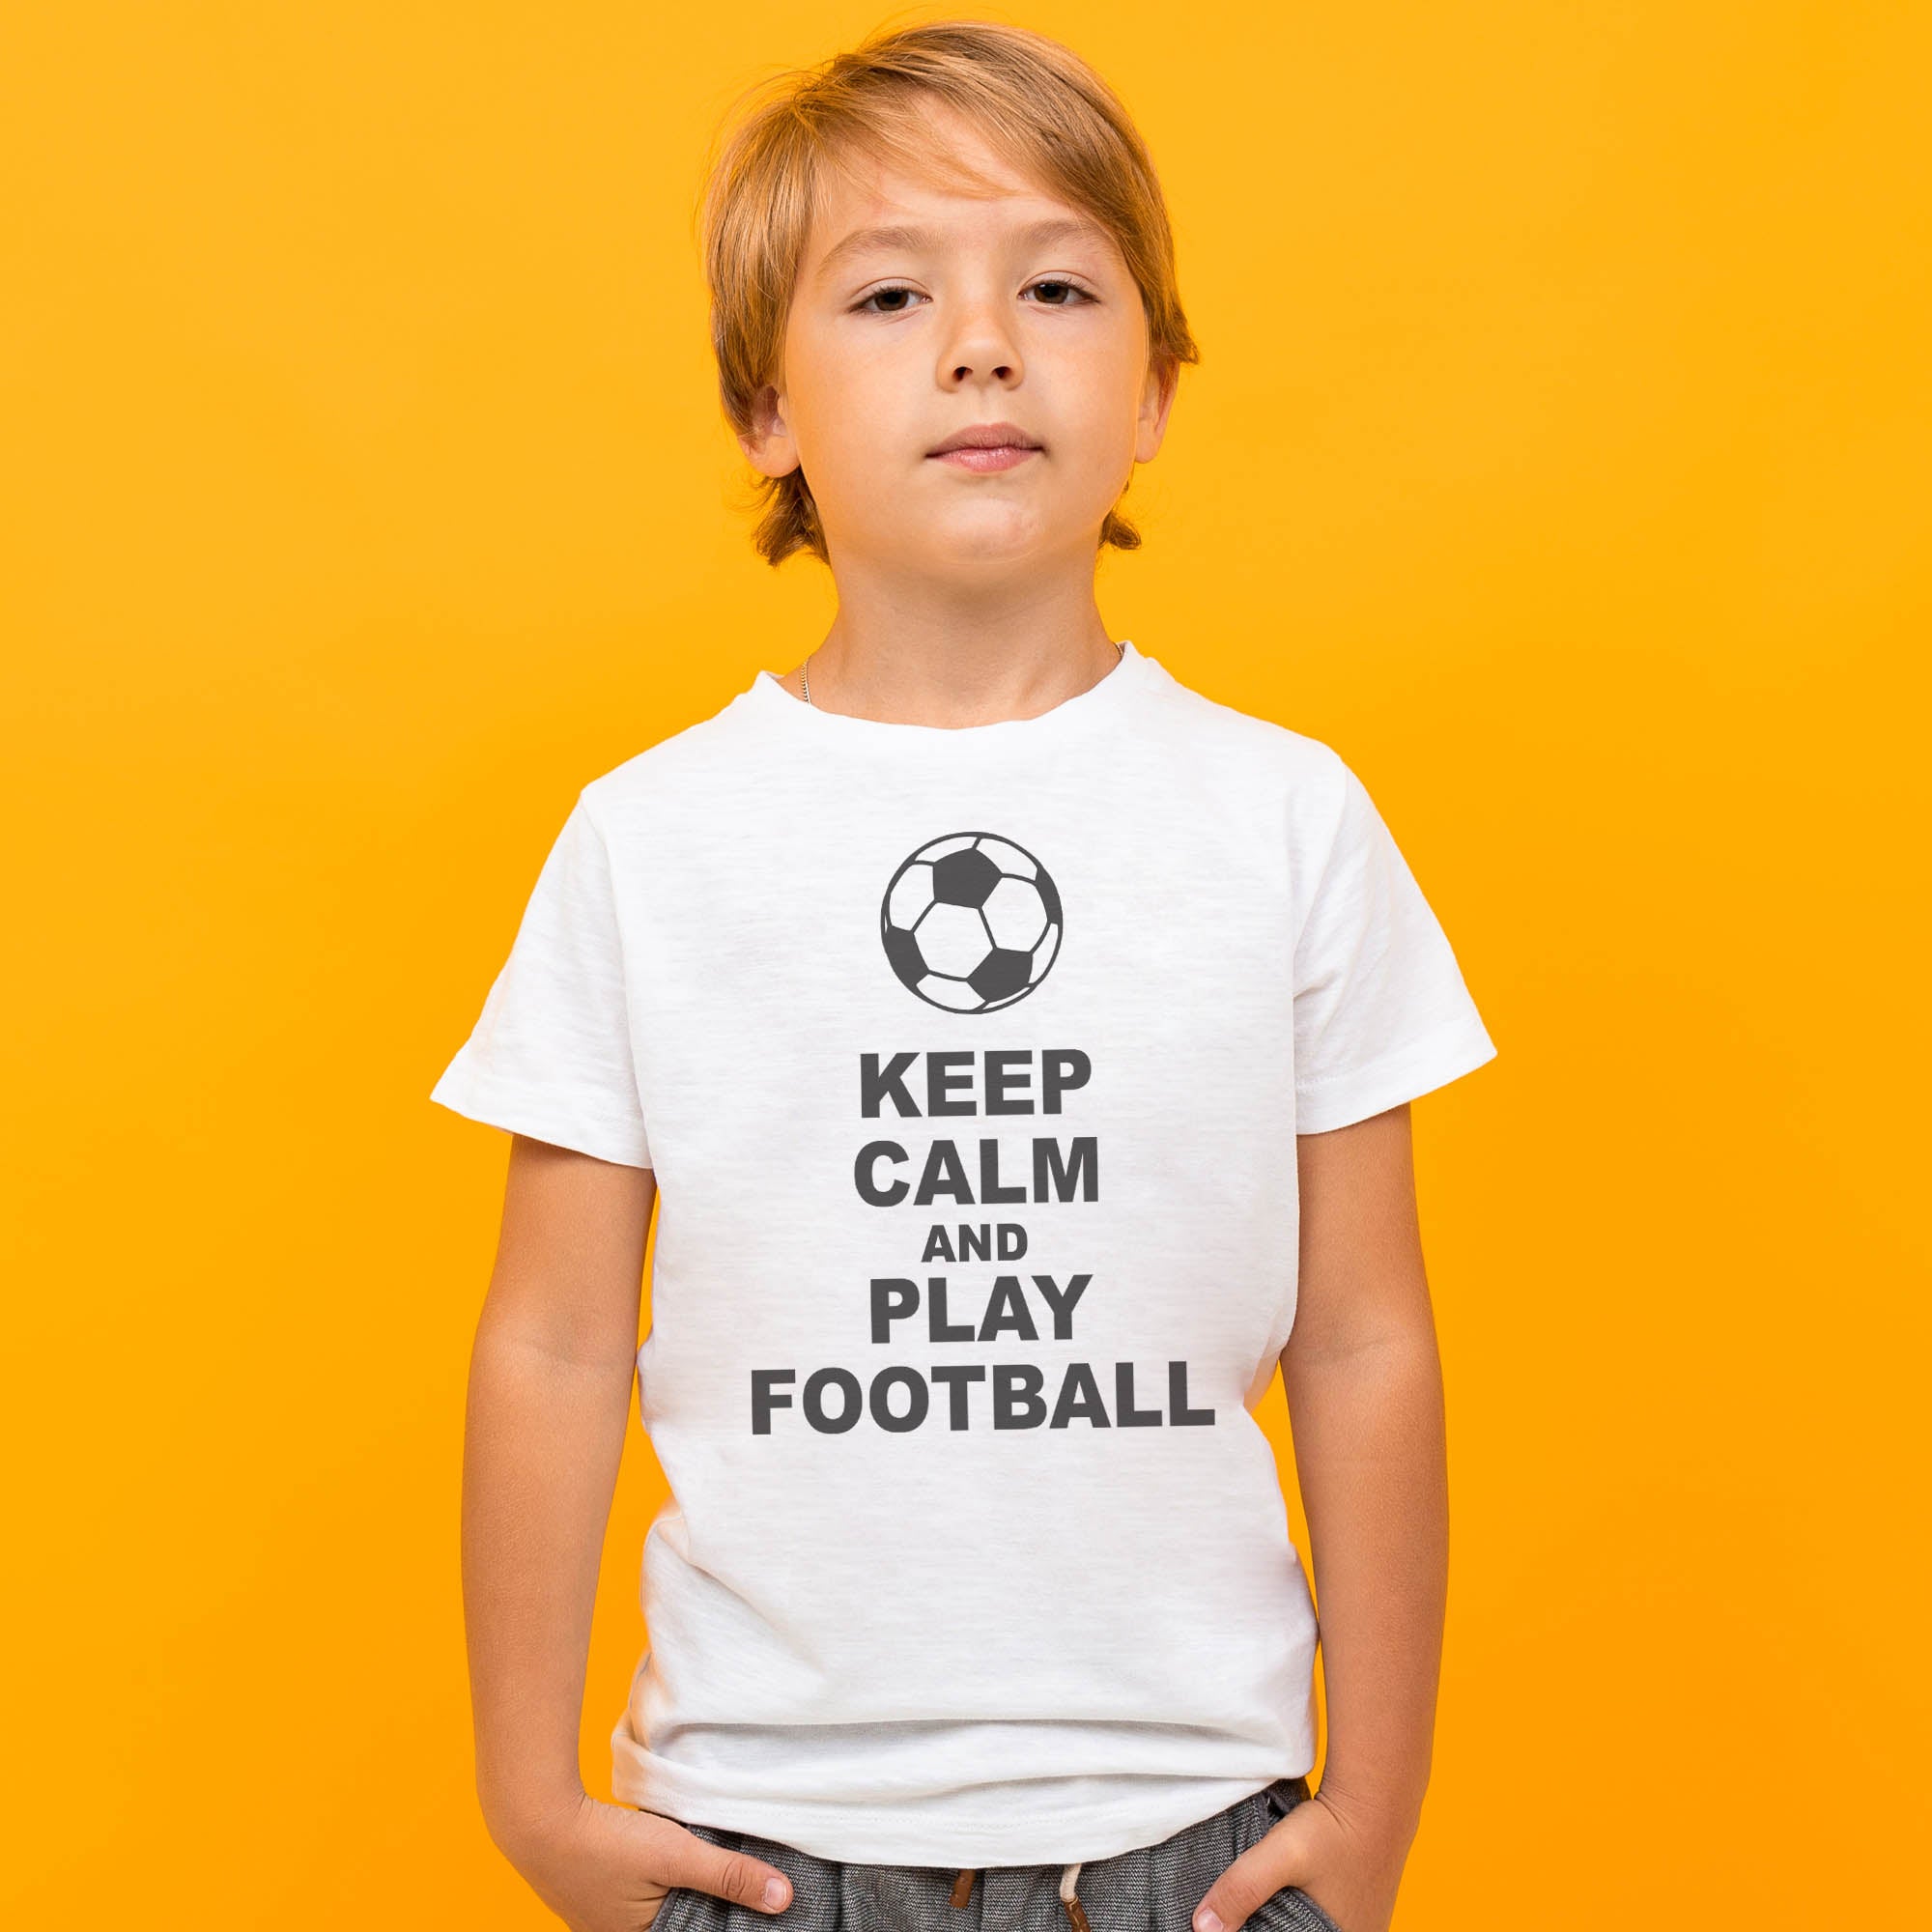 Keep Calm and Play Football - Kids T-Shirt